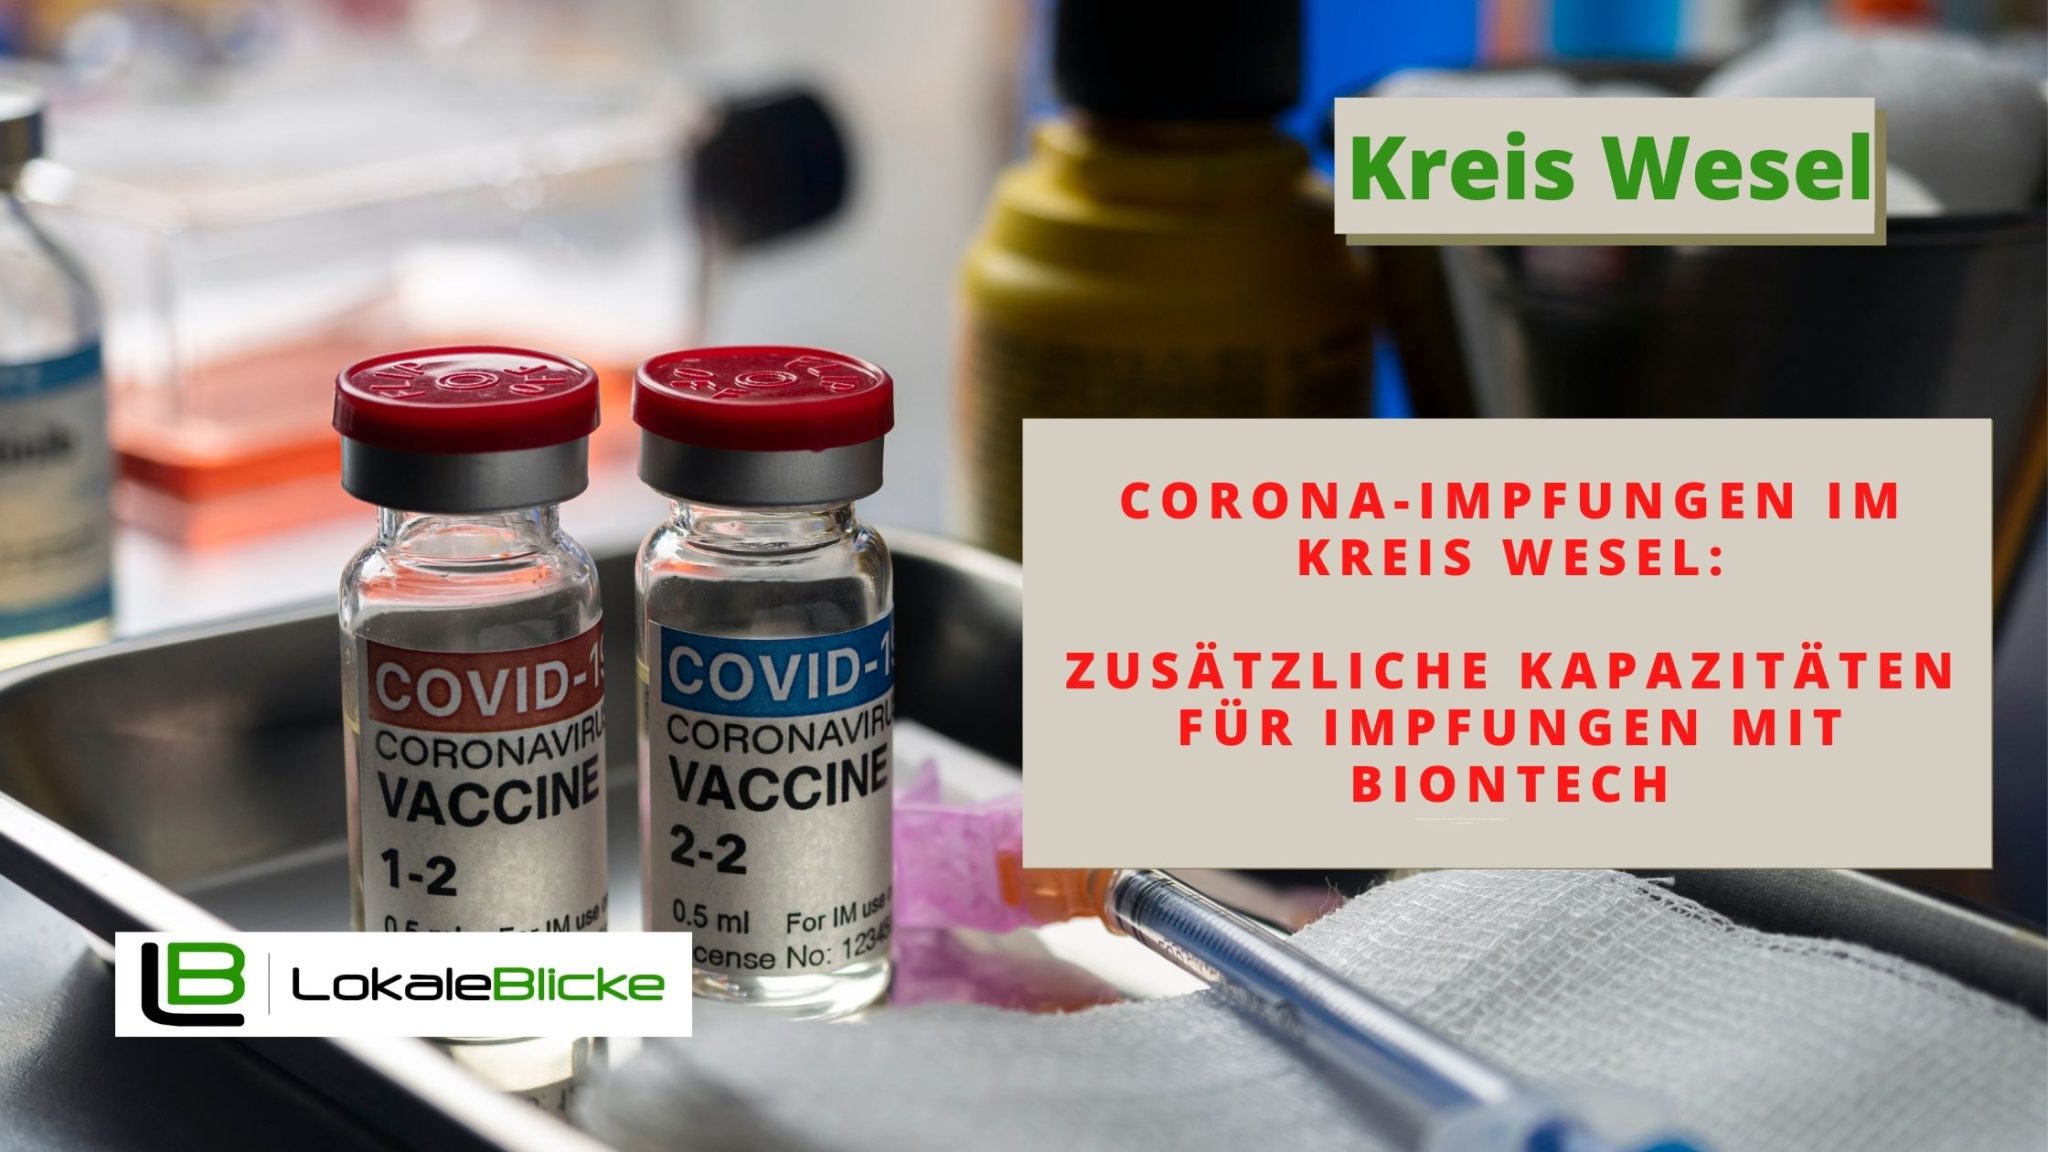 Corona-Impfungen im Kreis Wesel: